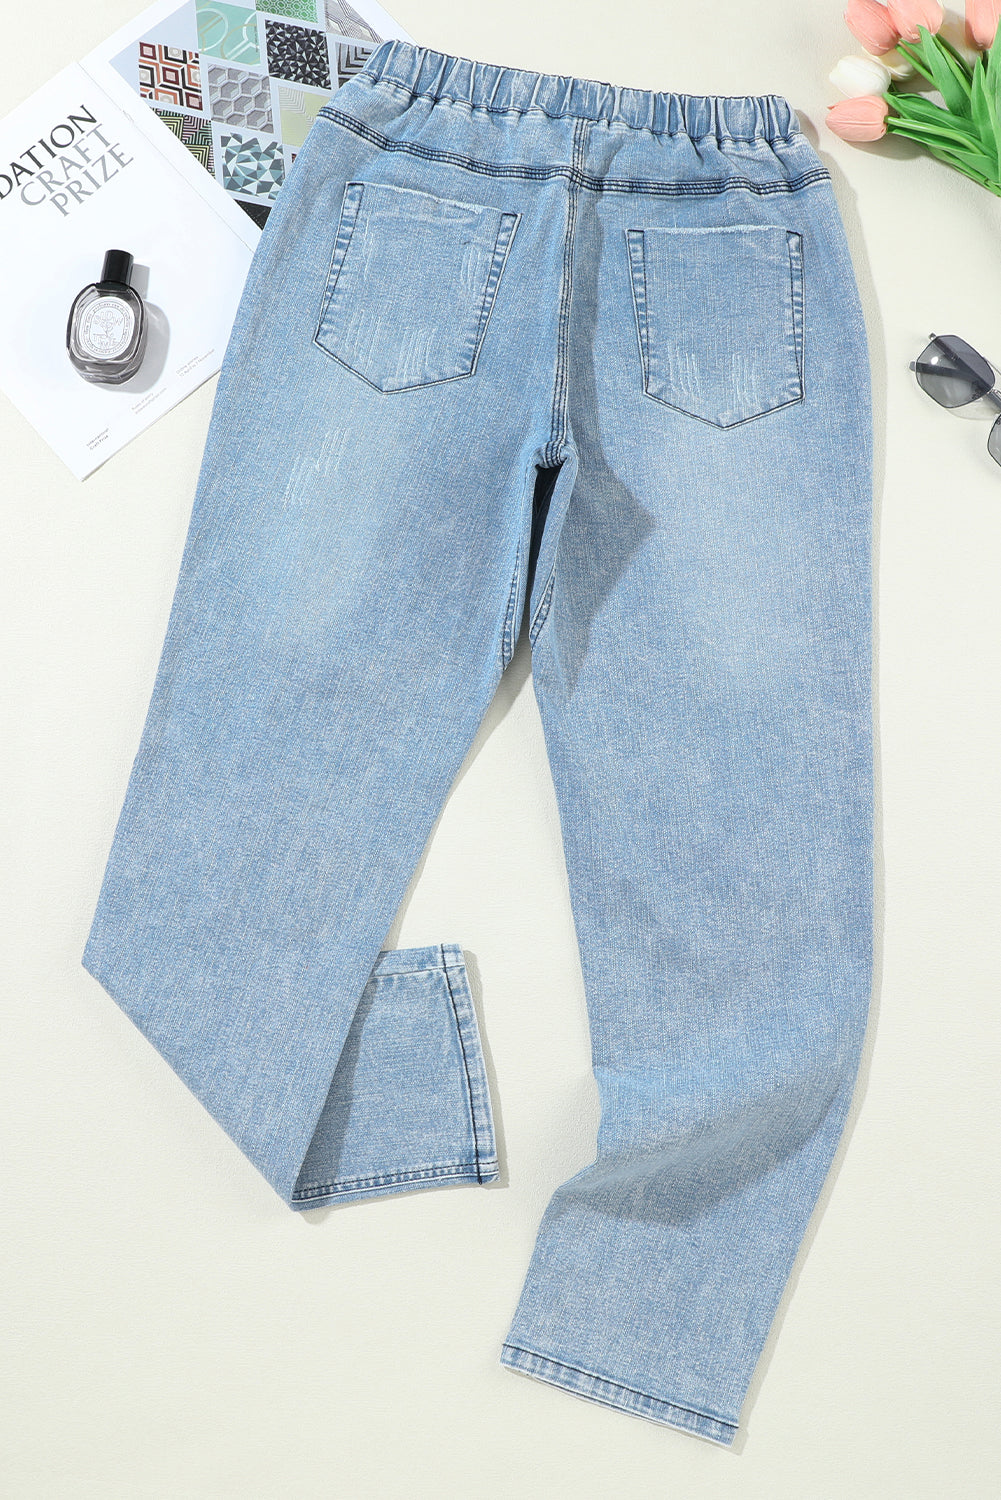 Plaid Patches Cotton Pocketed Denim Jeans